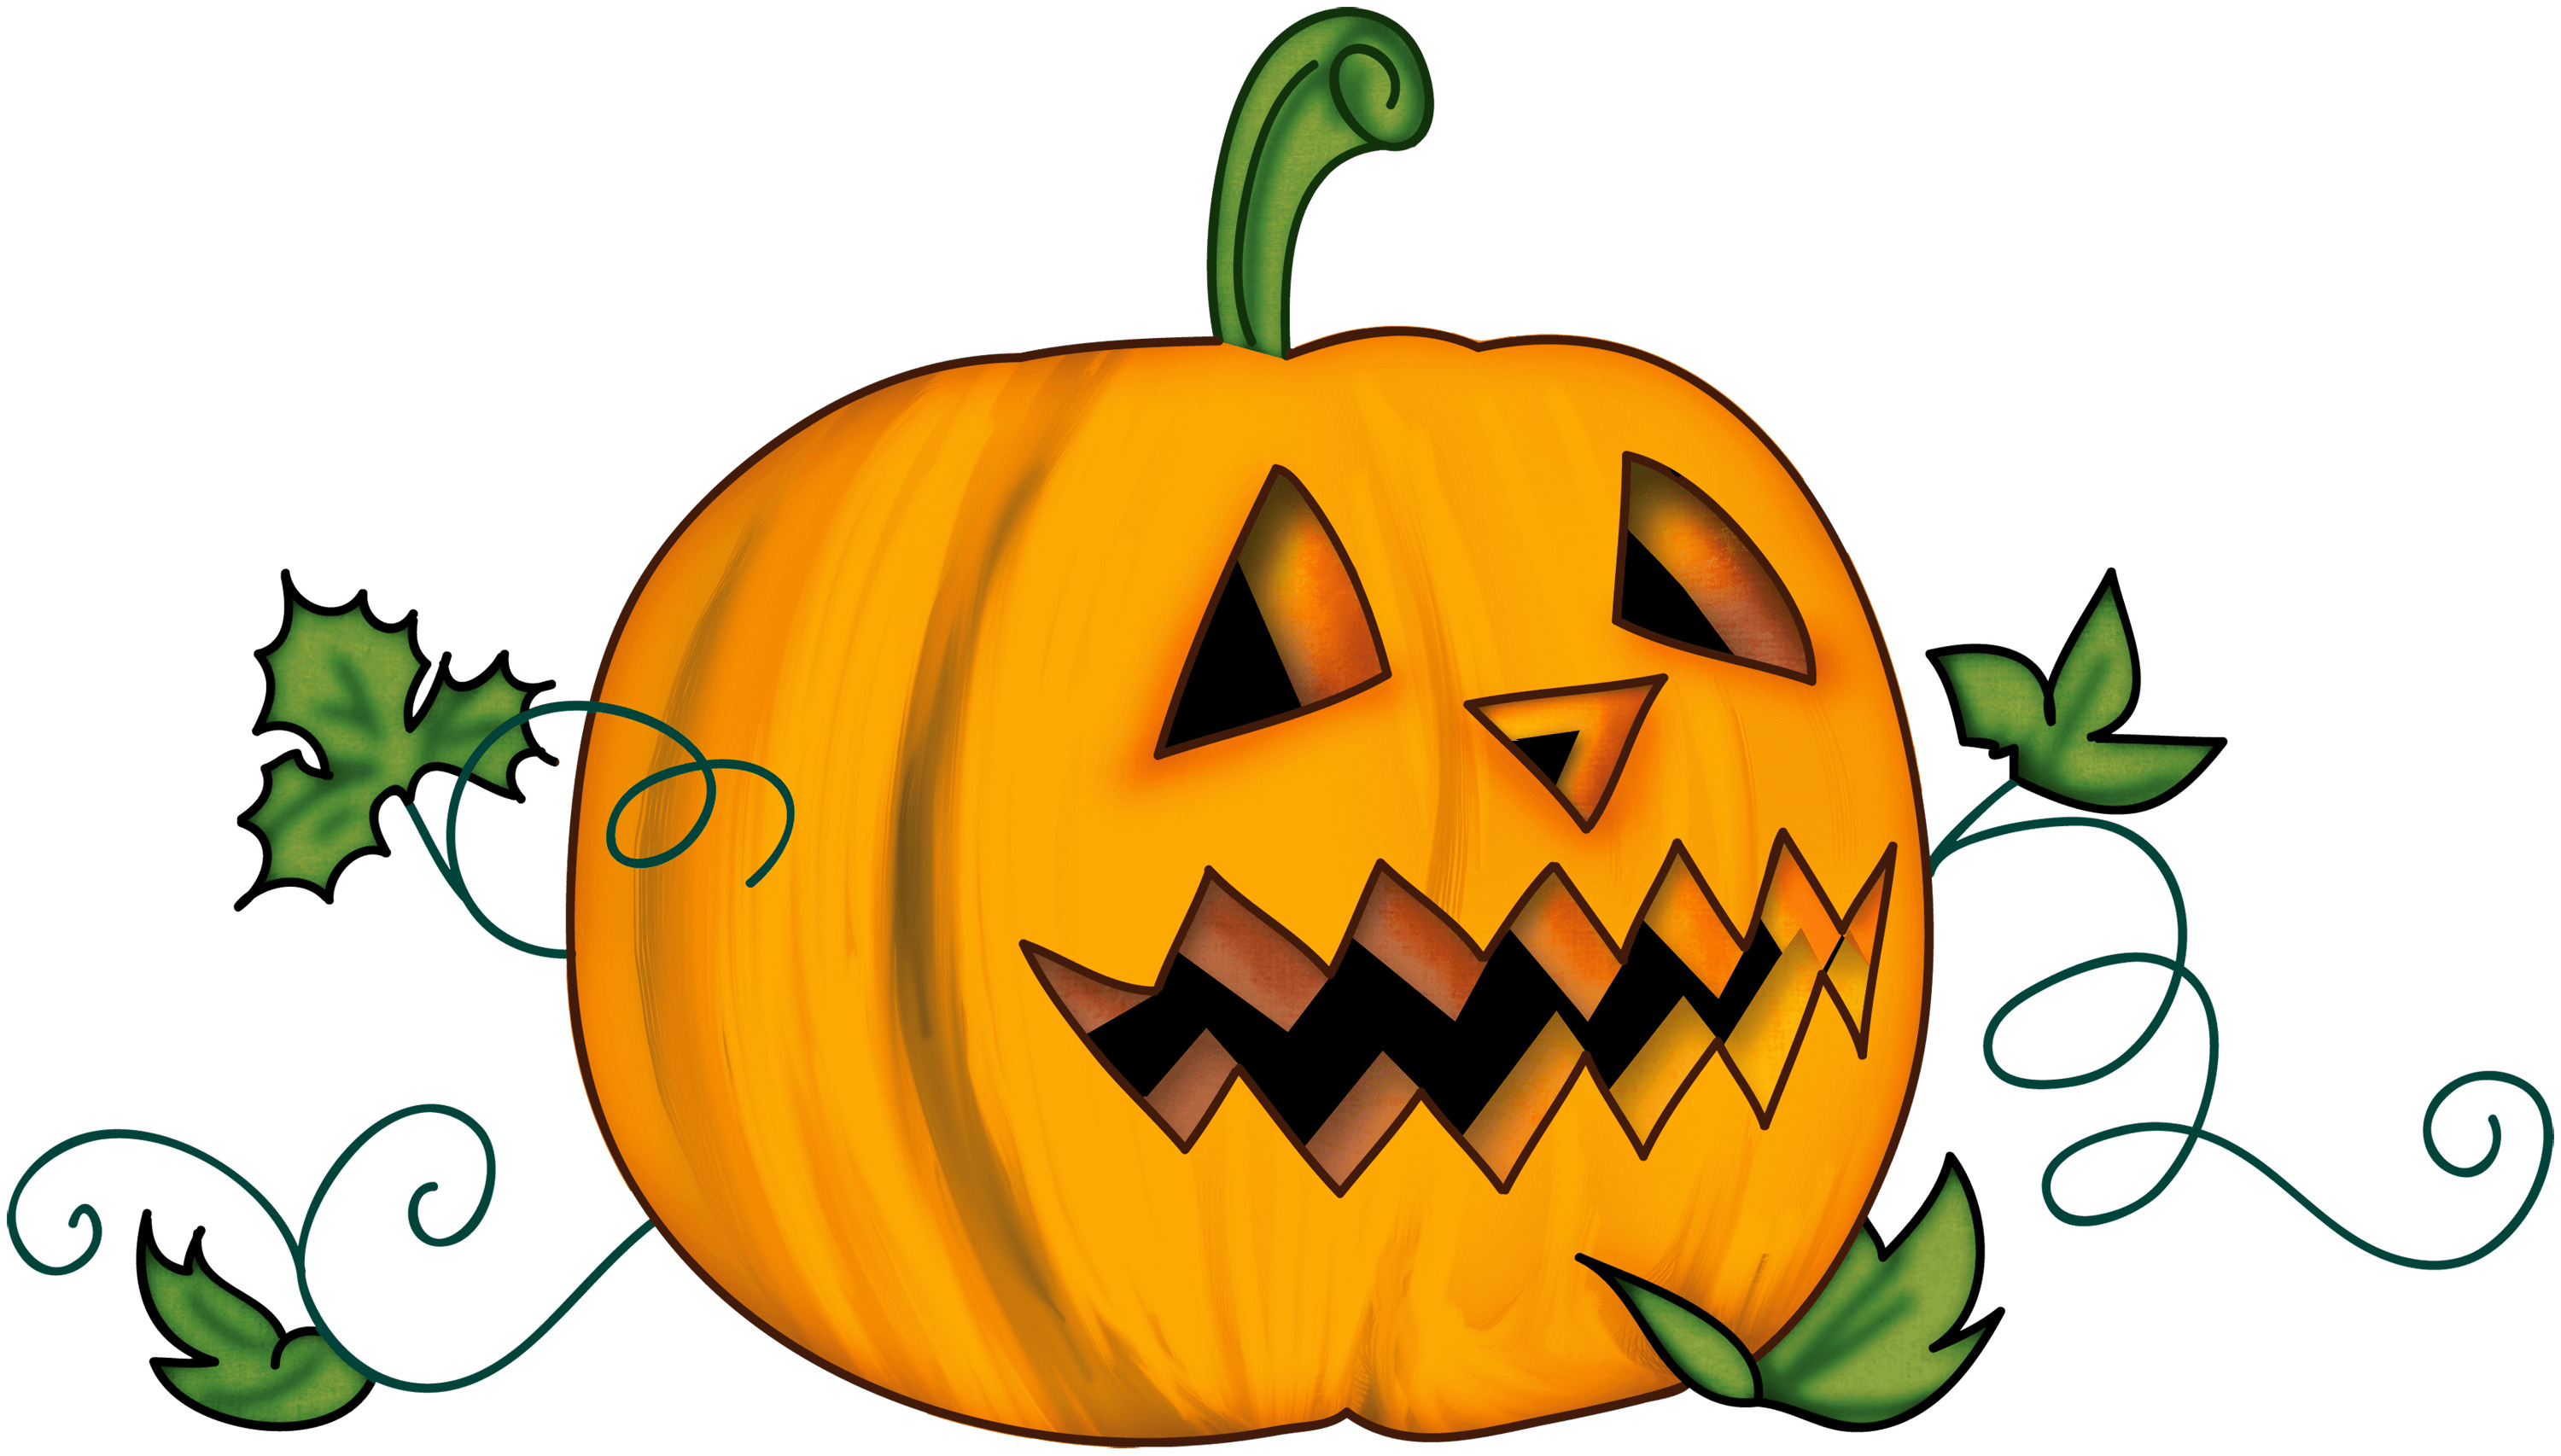 Another Pumpkin Halloween icons